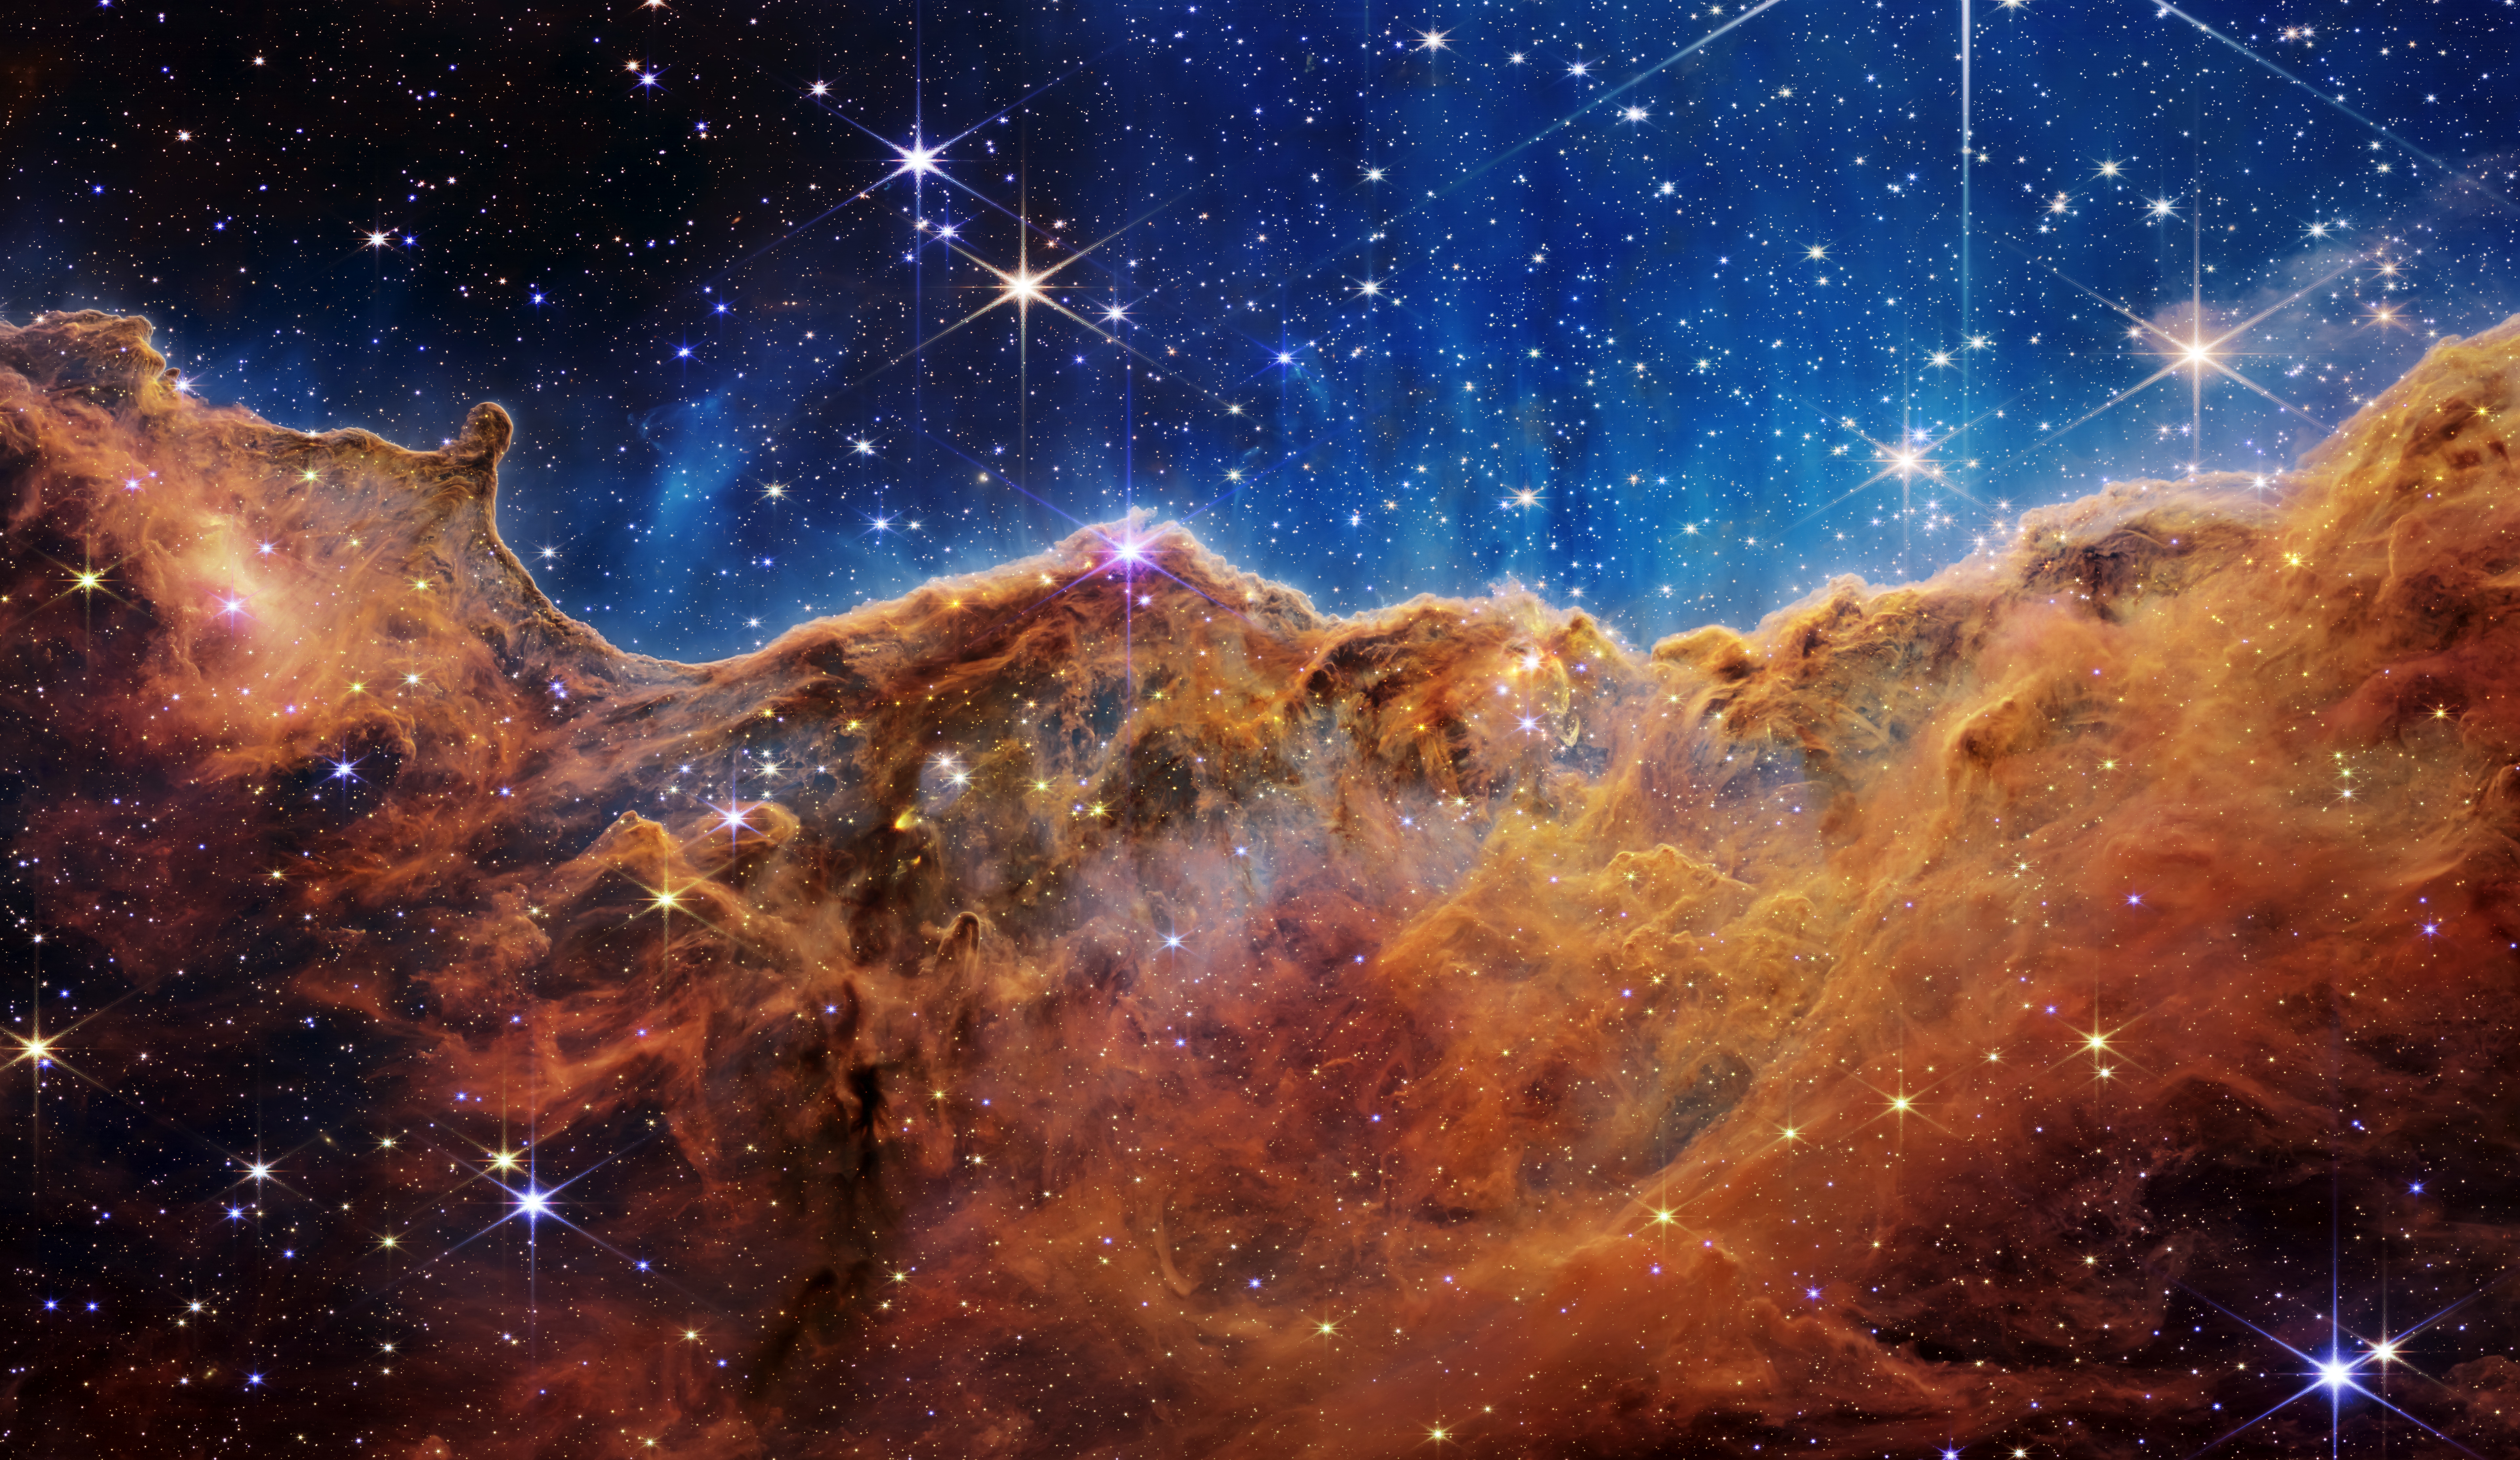 HD wallpaper, 8K, James Webb Space Telescope, 5K, Cosmic Cliffs, Emission Nebula, Carina Nebula